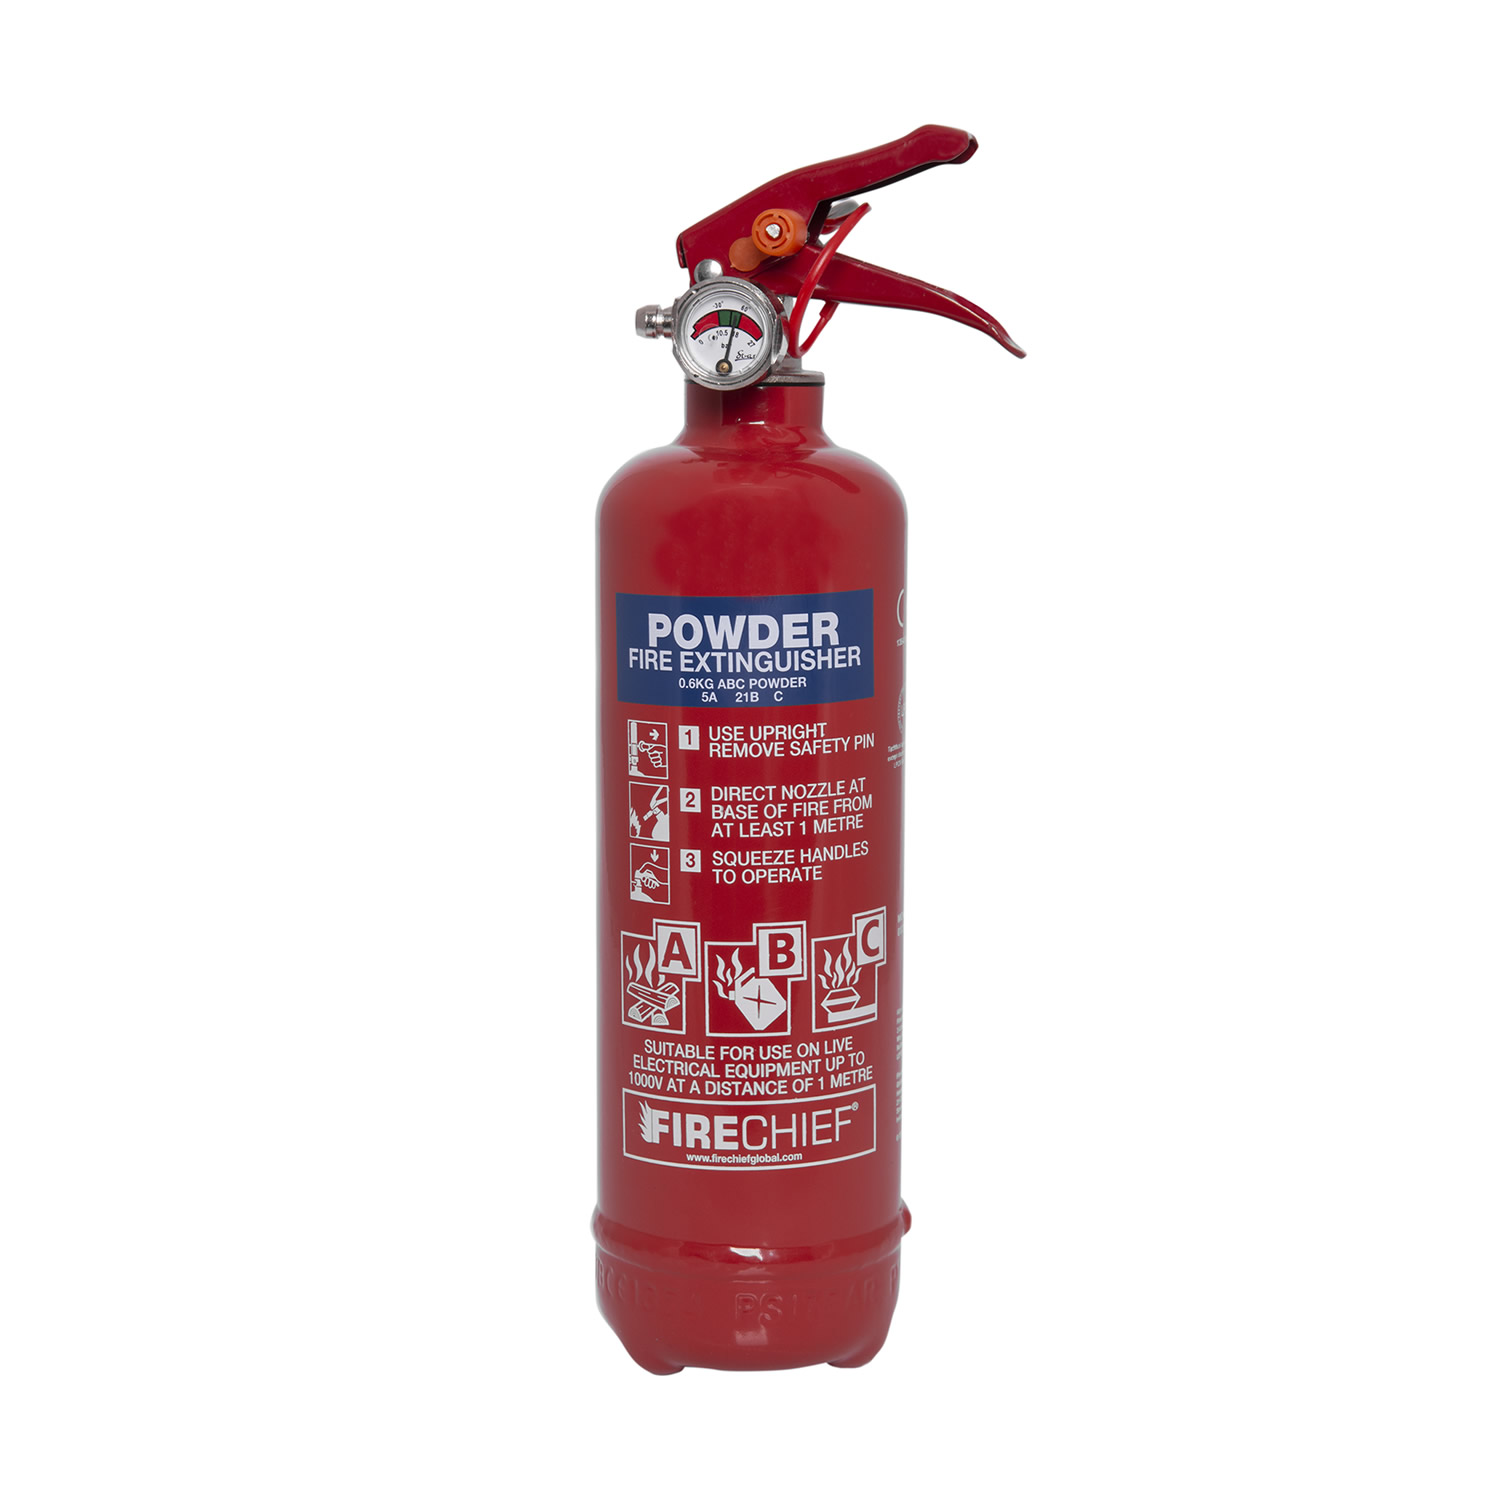 600g Powder Fire Extinguishers - Firechief